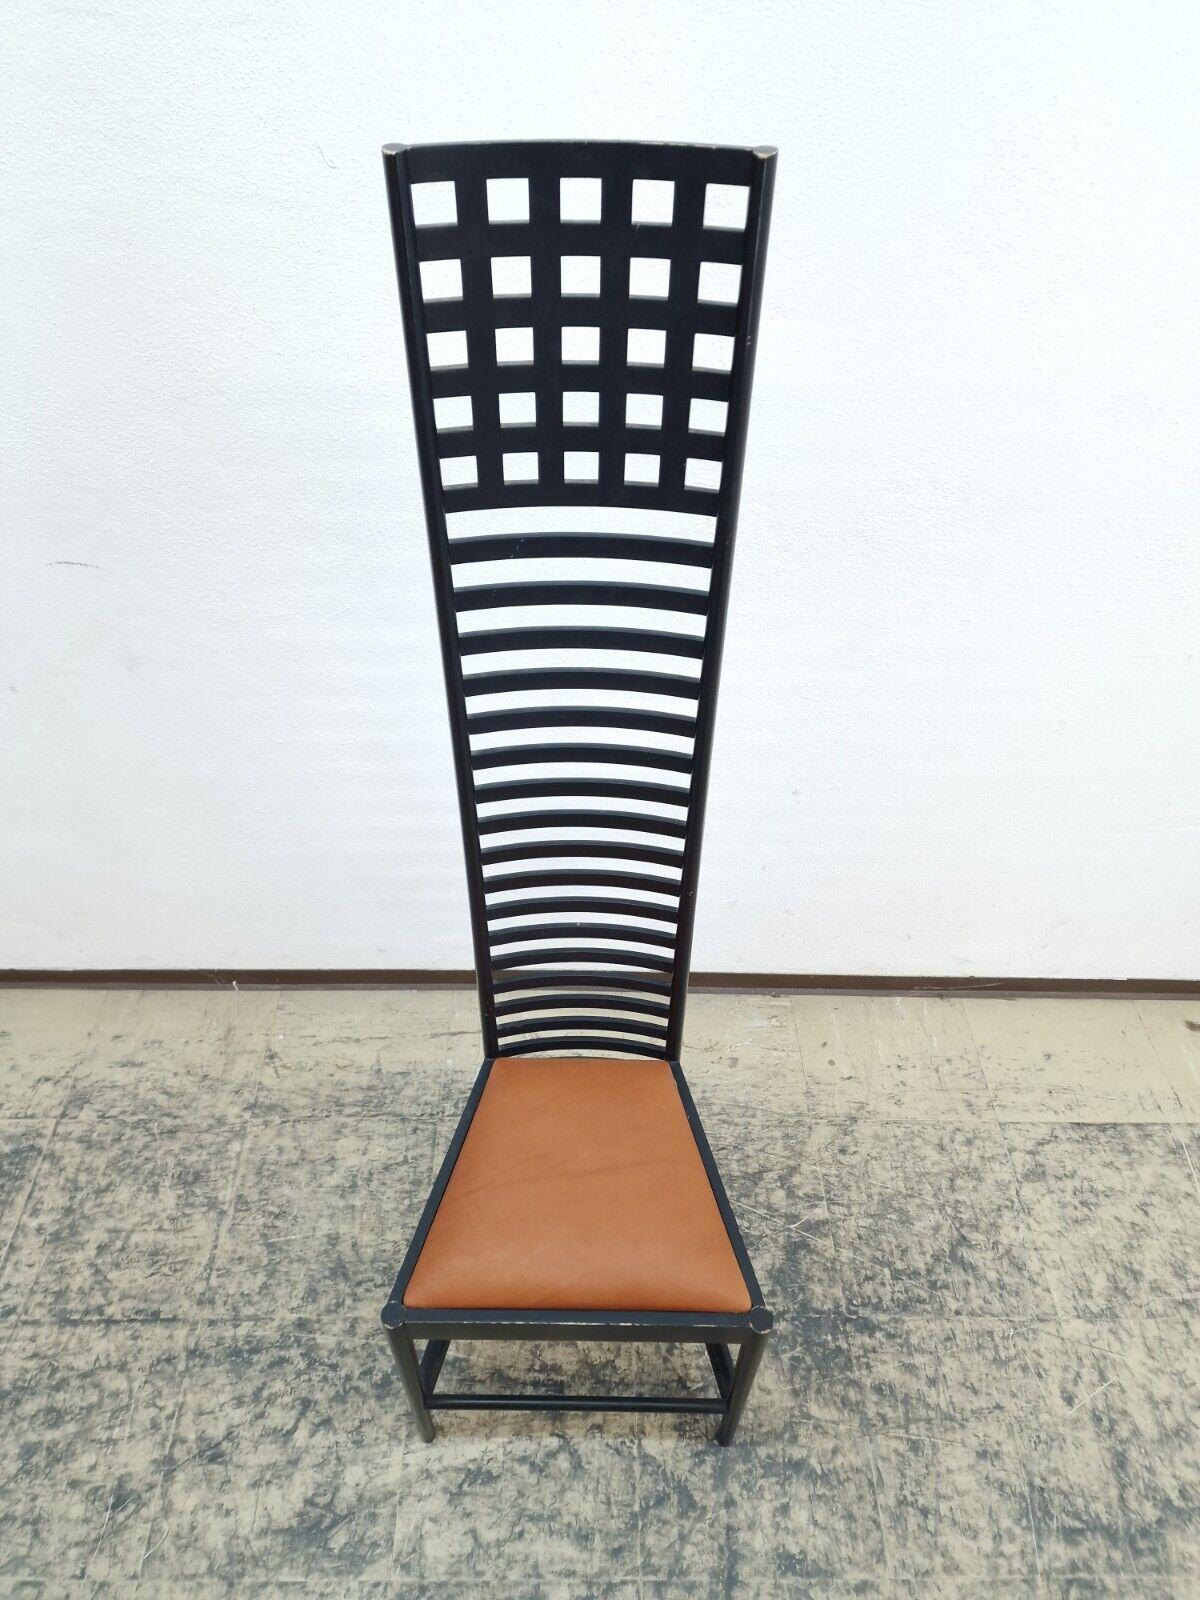 Cassina Rennie Mackintosh Holzstuhl Designerstuhl Hill House chair For Sale 2